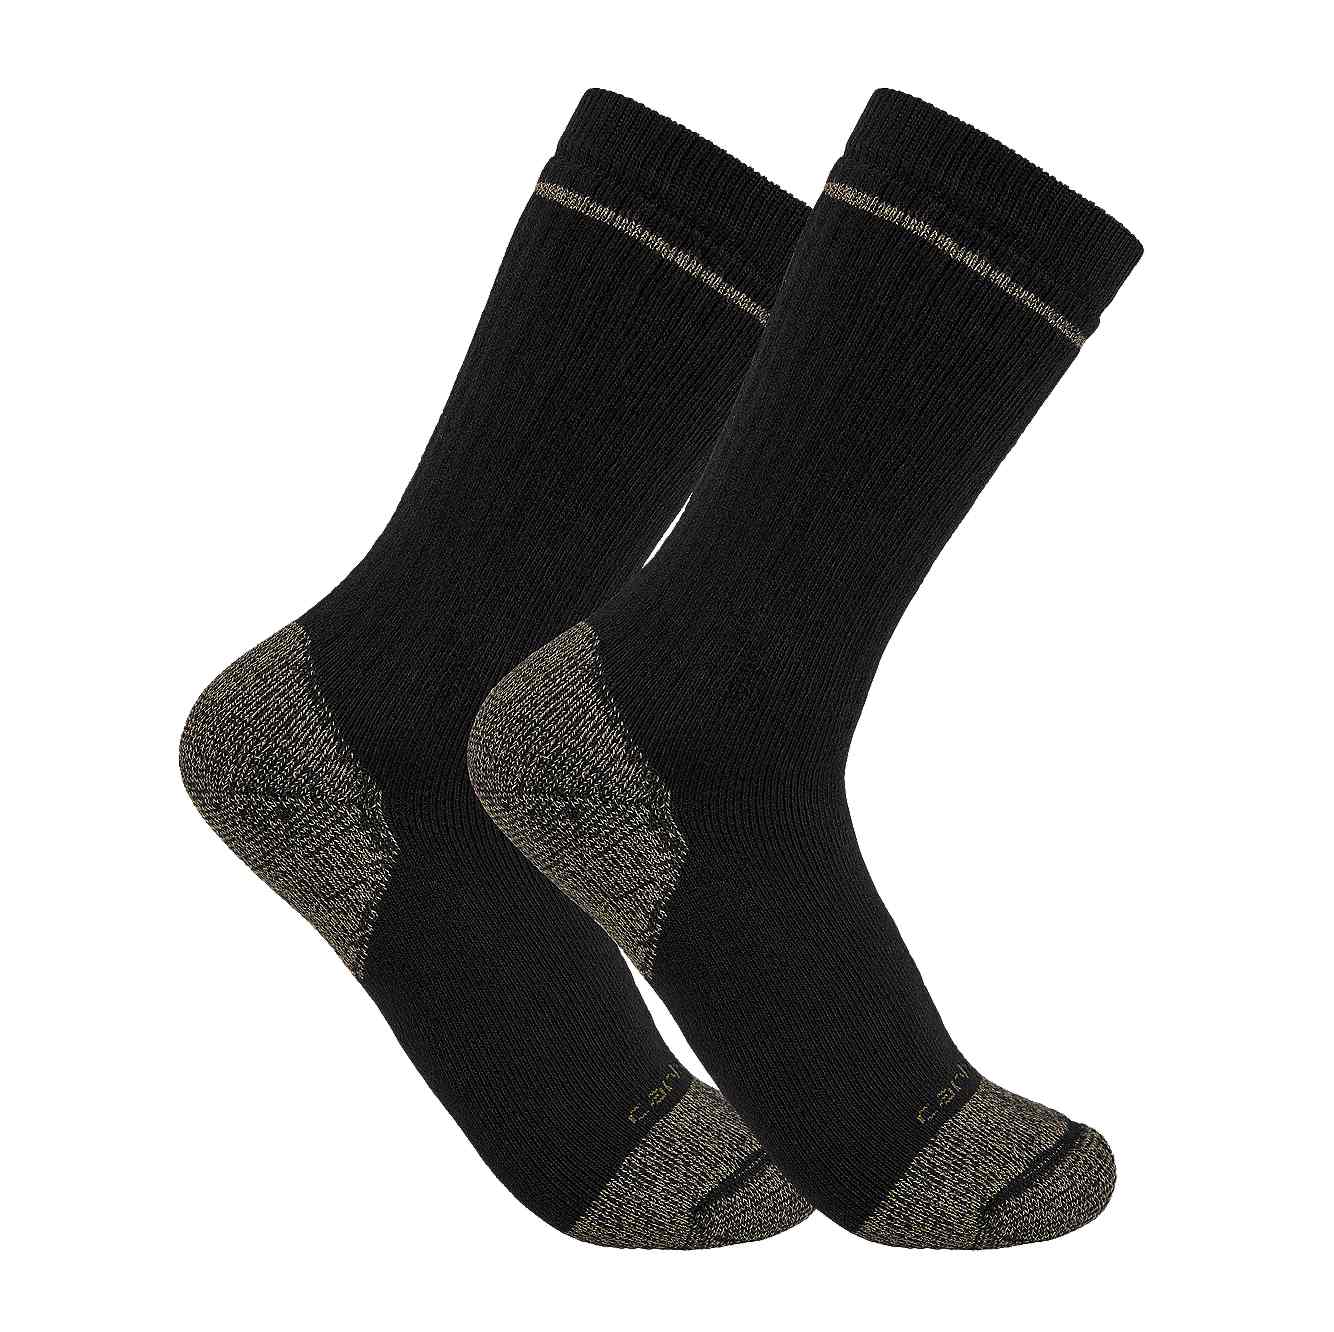 MIDWEIGHT COTTON BLEND STEEL TOE BOOT SOCK 2 PAIRS | Carhartt®